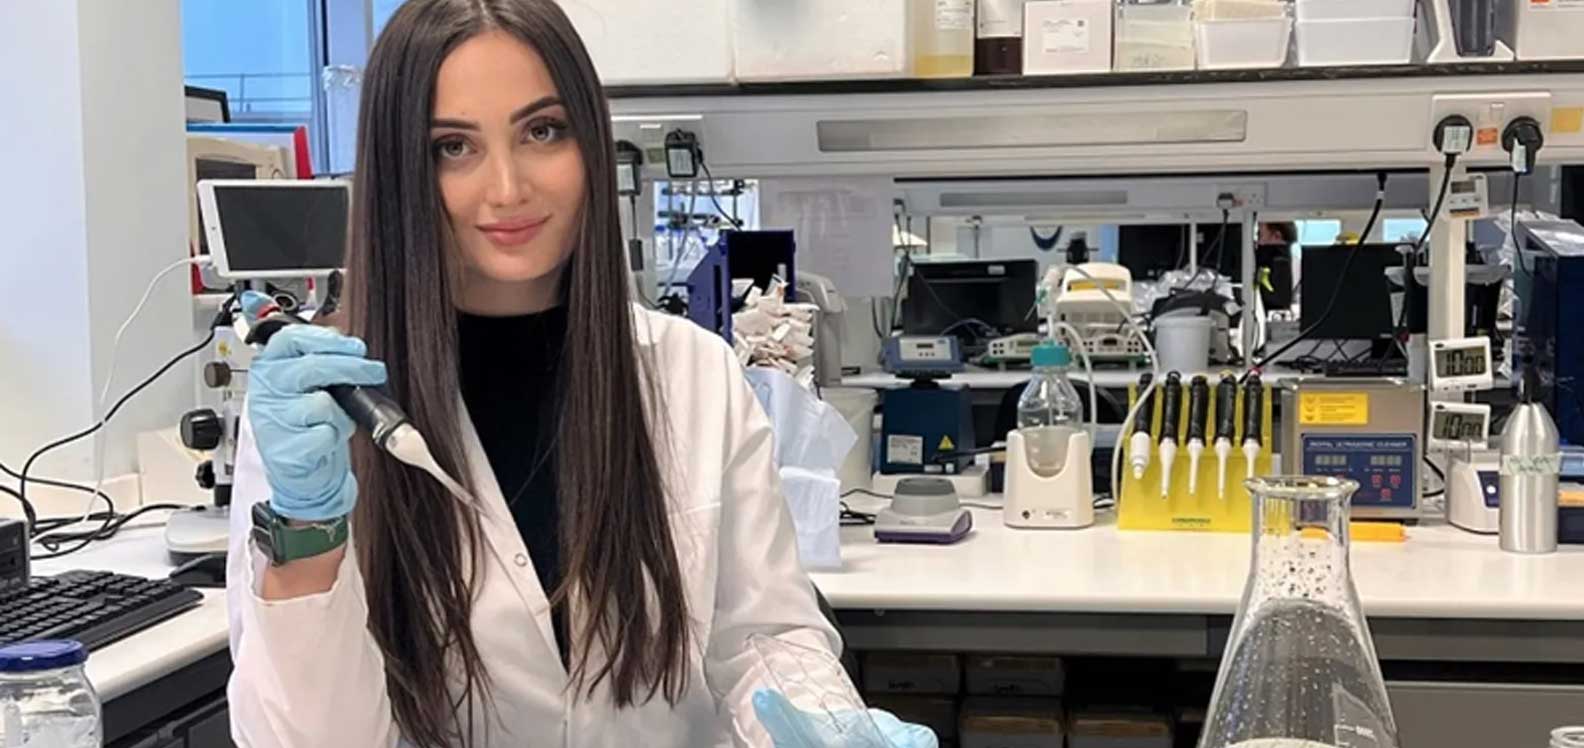 Ukrainian medical student spending a semester at Swansea